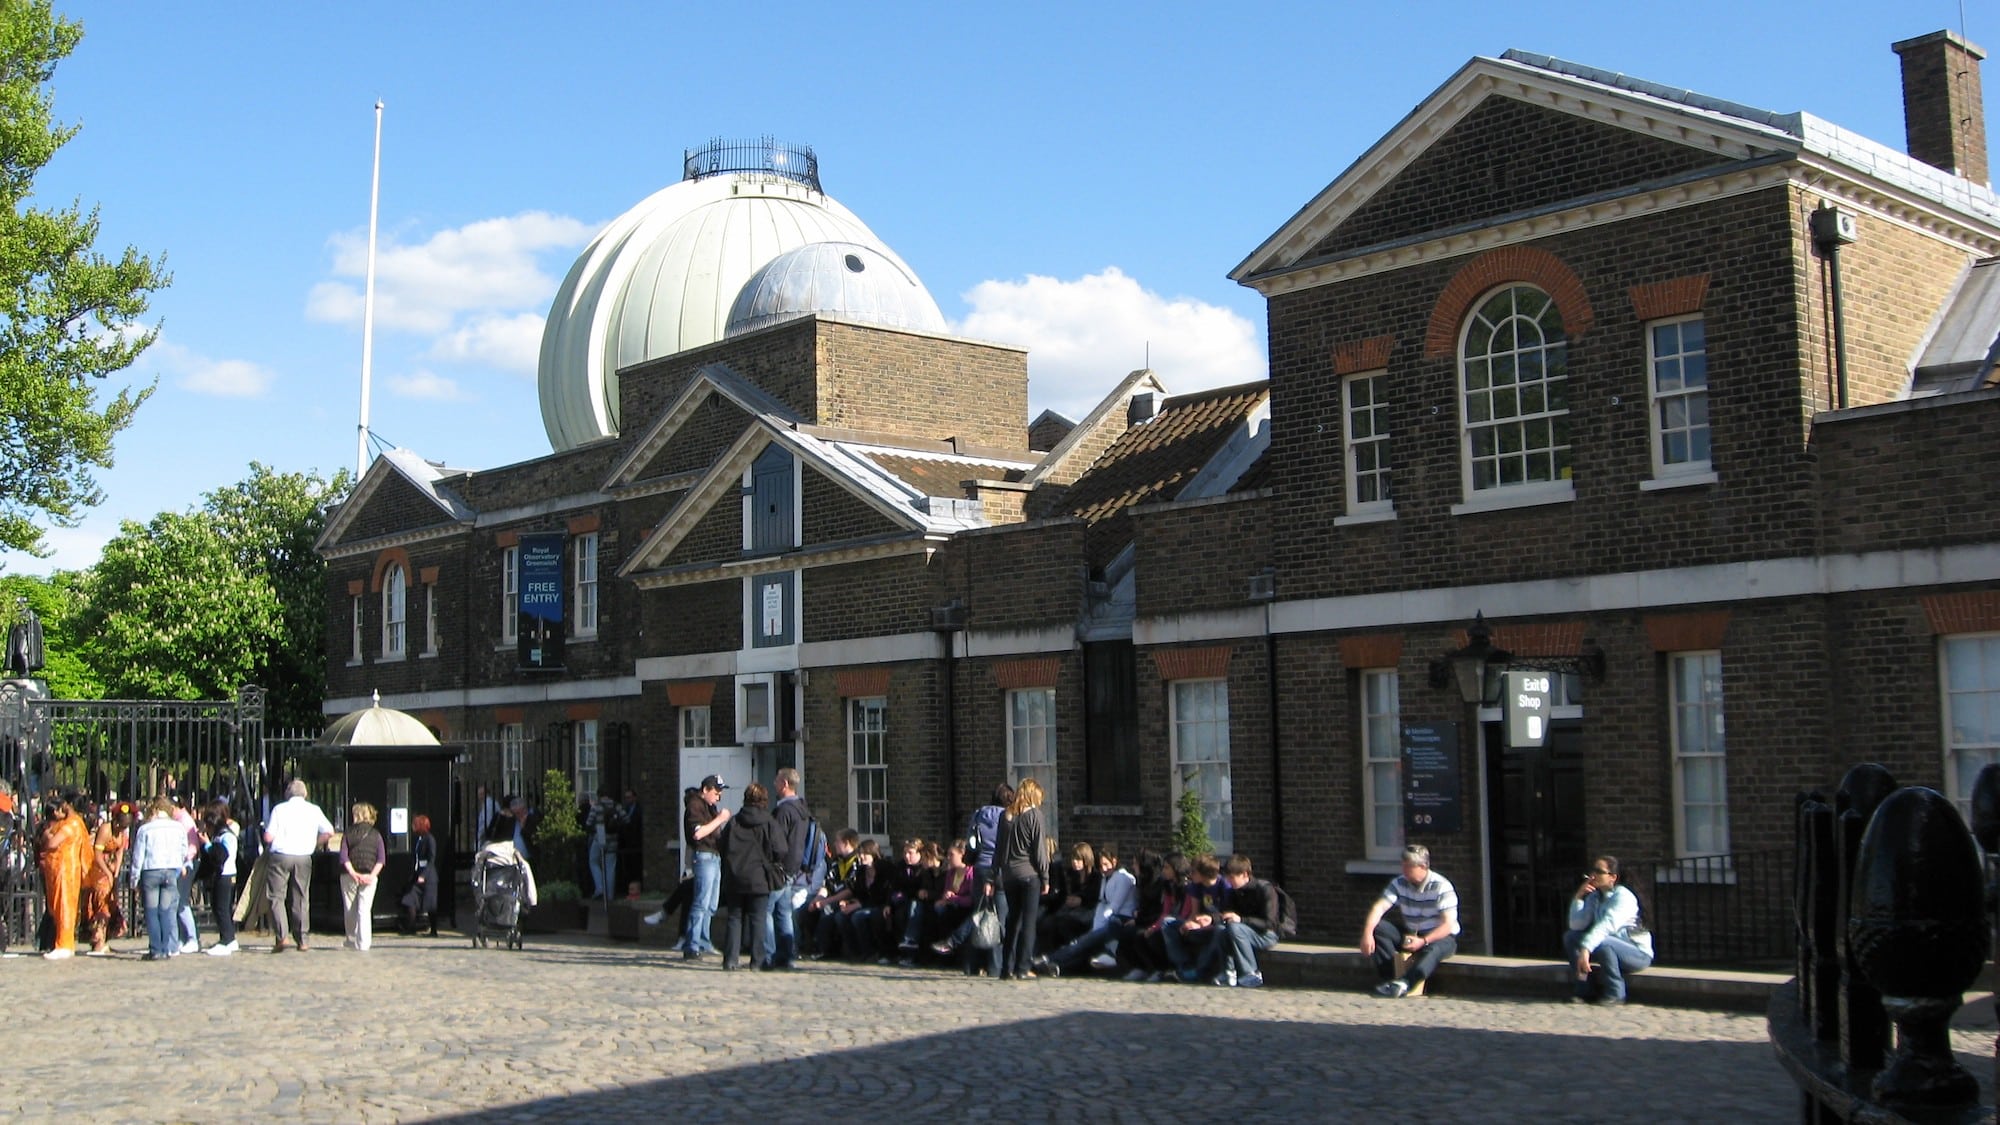 observatoire royal londres